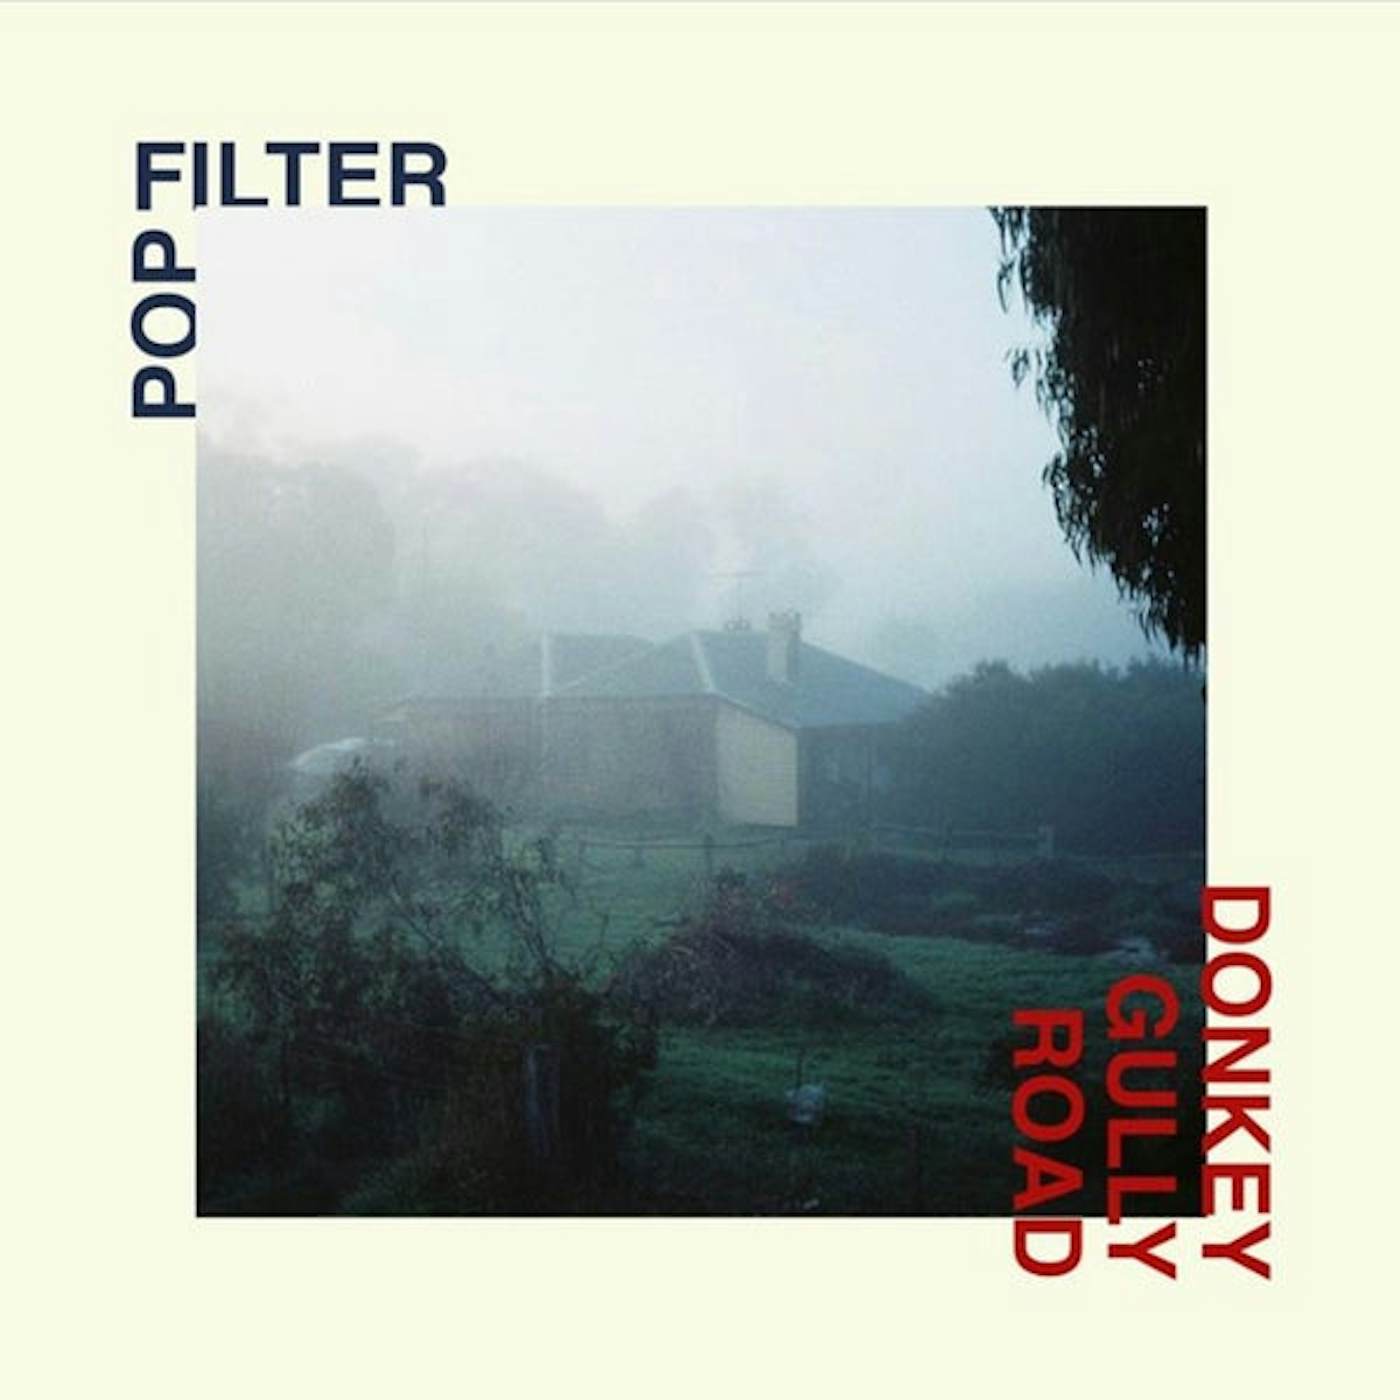 Pop Filter Donkey Gully Road Vinyl Record